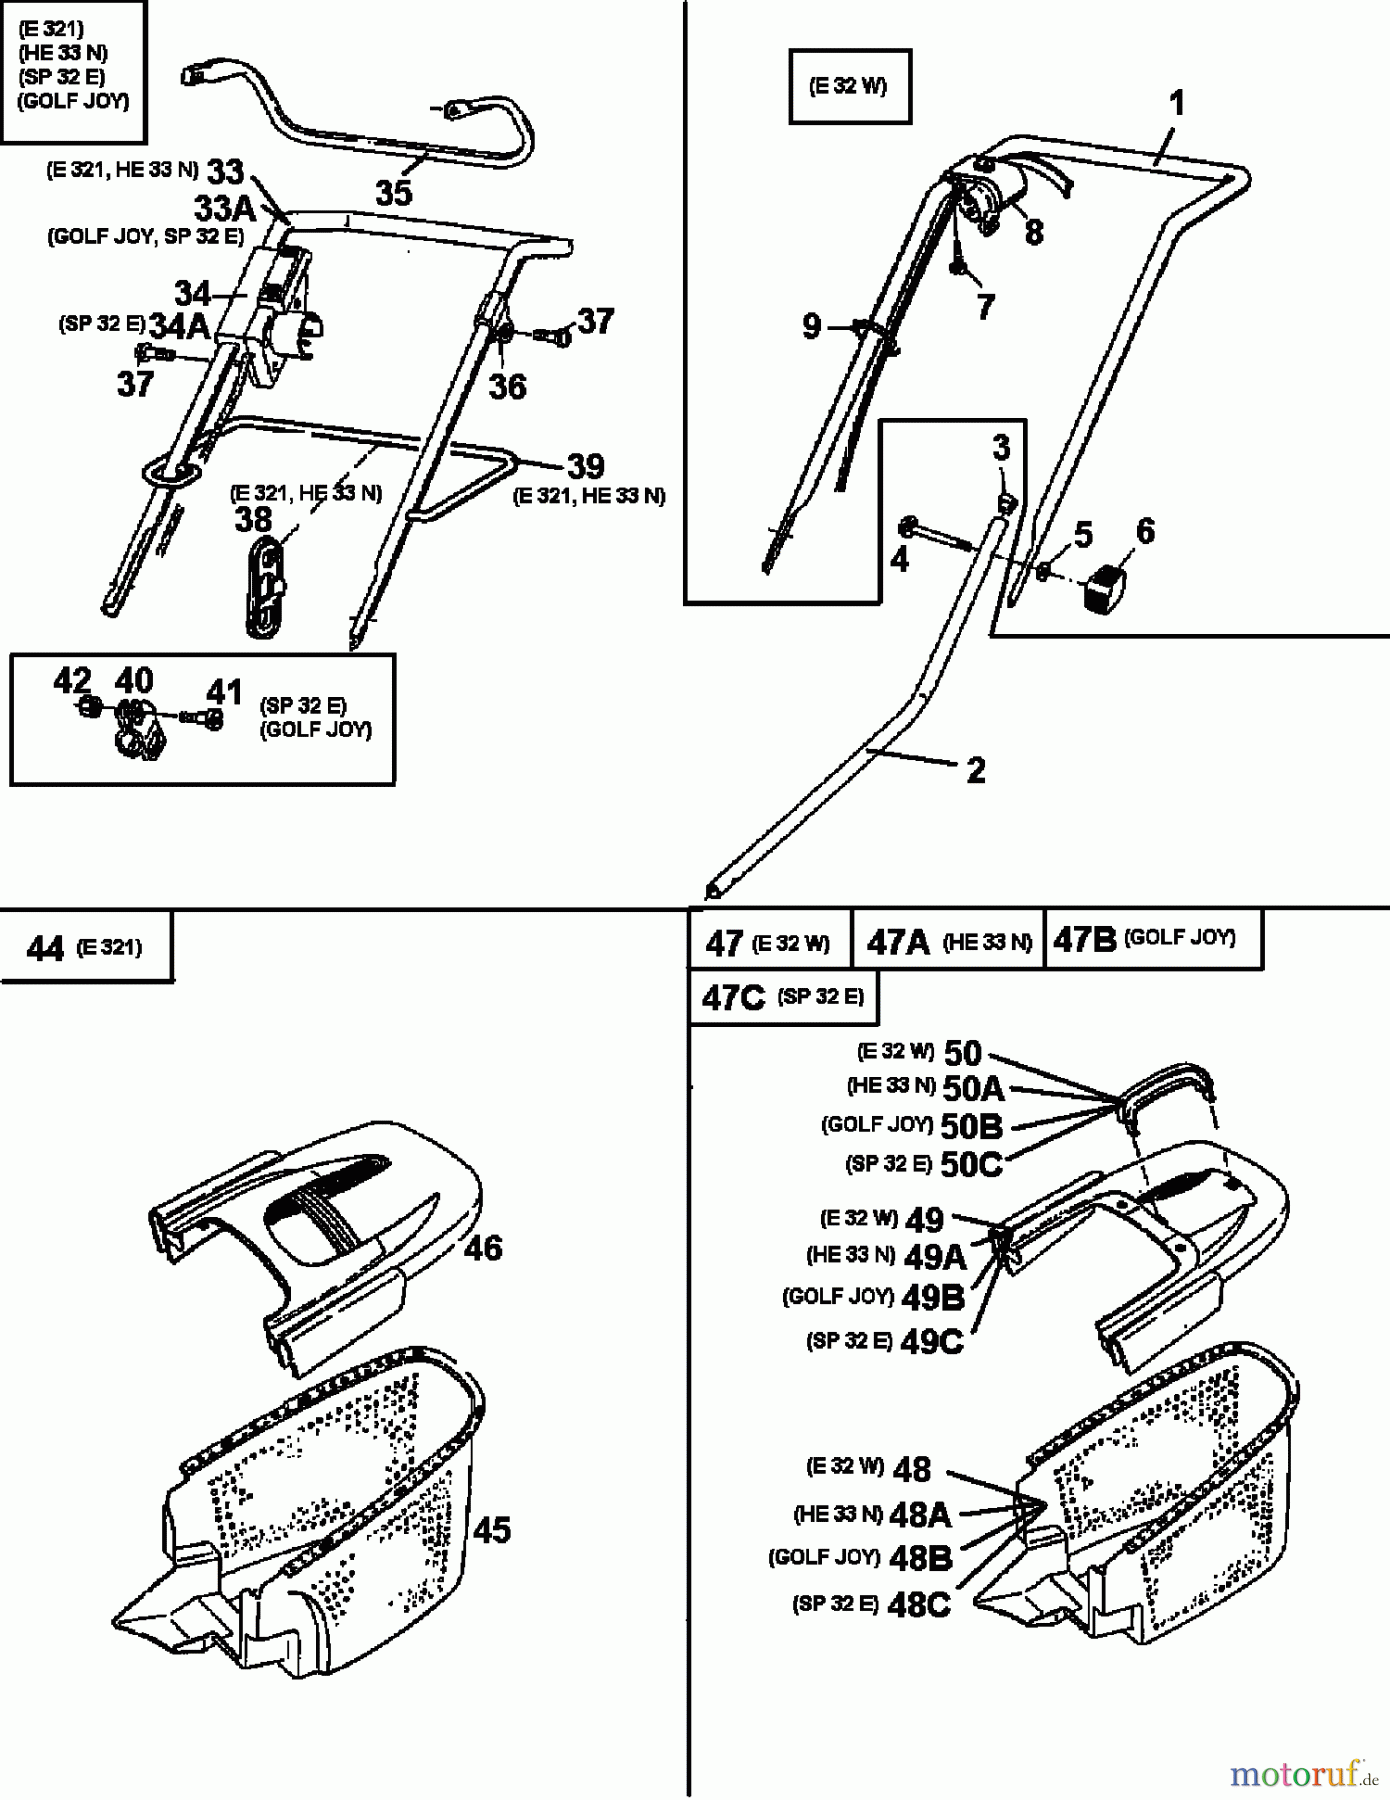  Stinnes Pro Electric mower SP 32 E 18A-C5D-667  (1998) Grass box, Handle